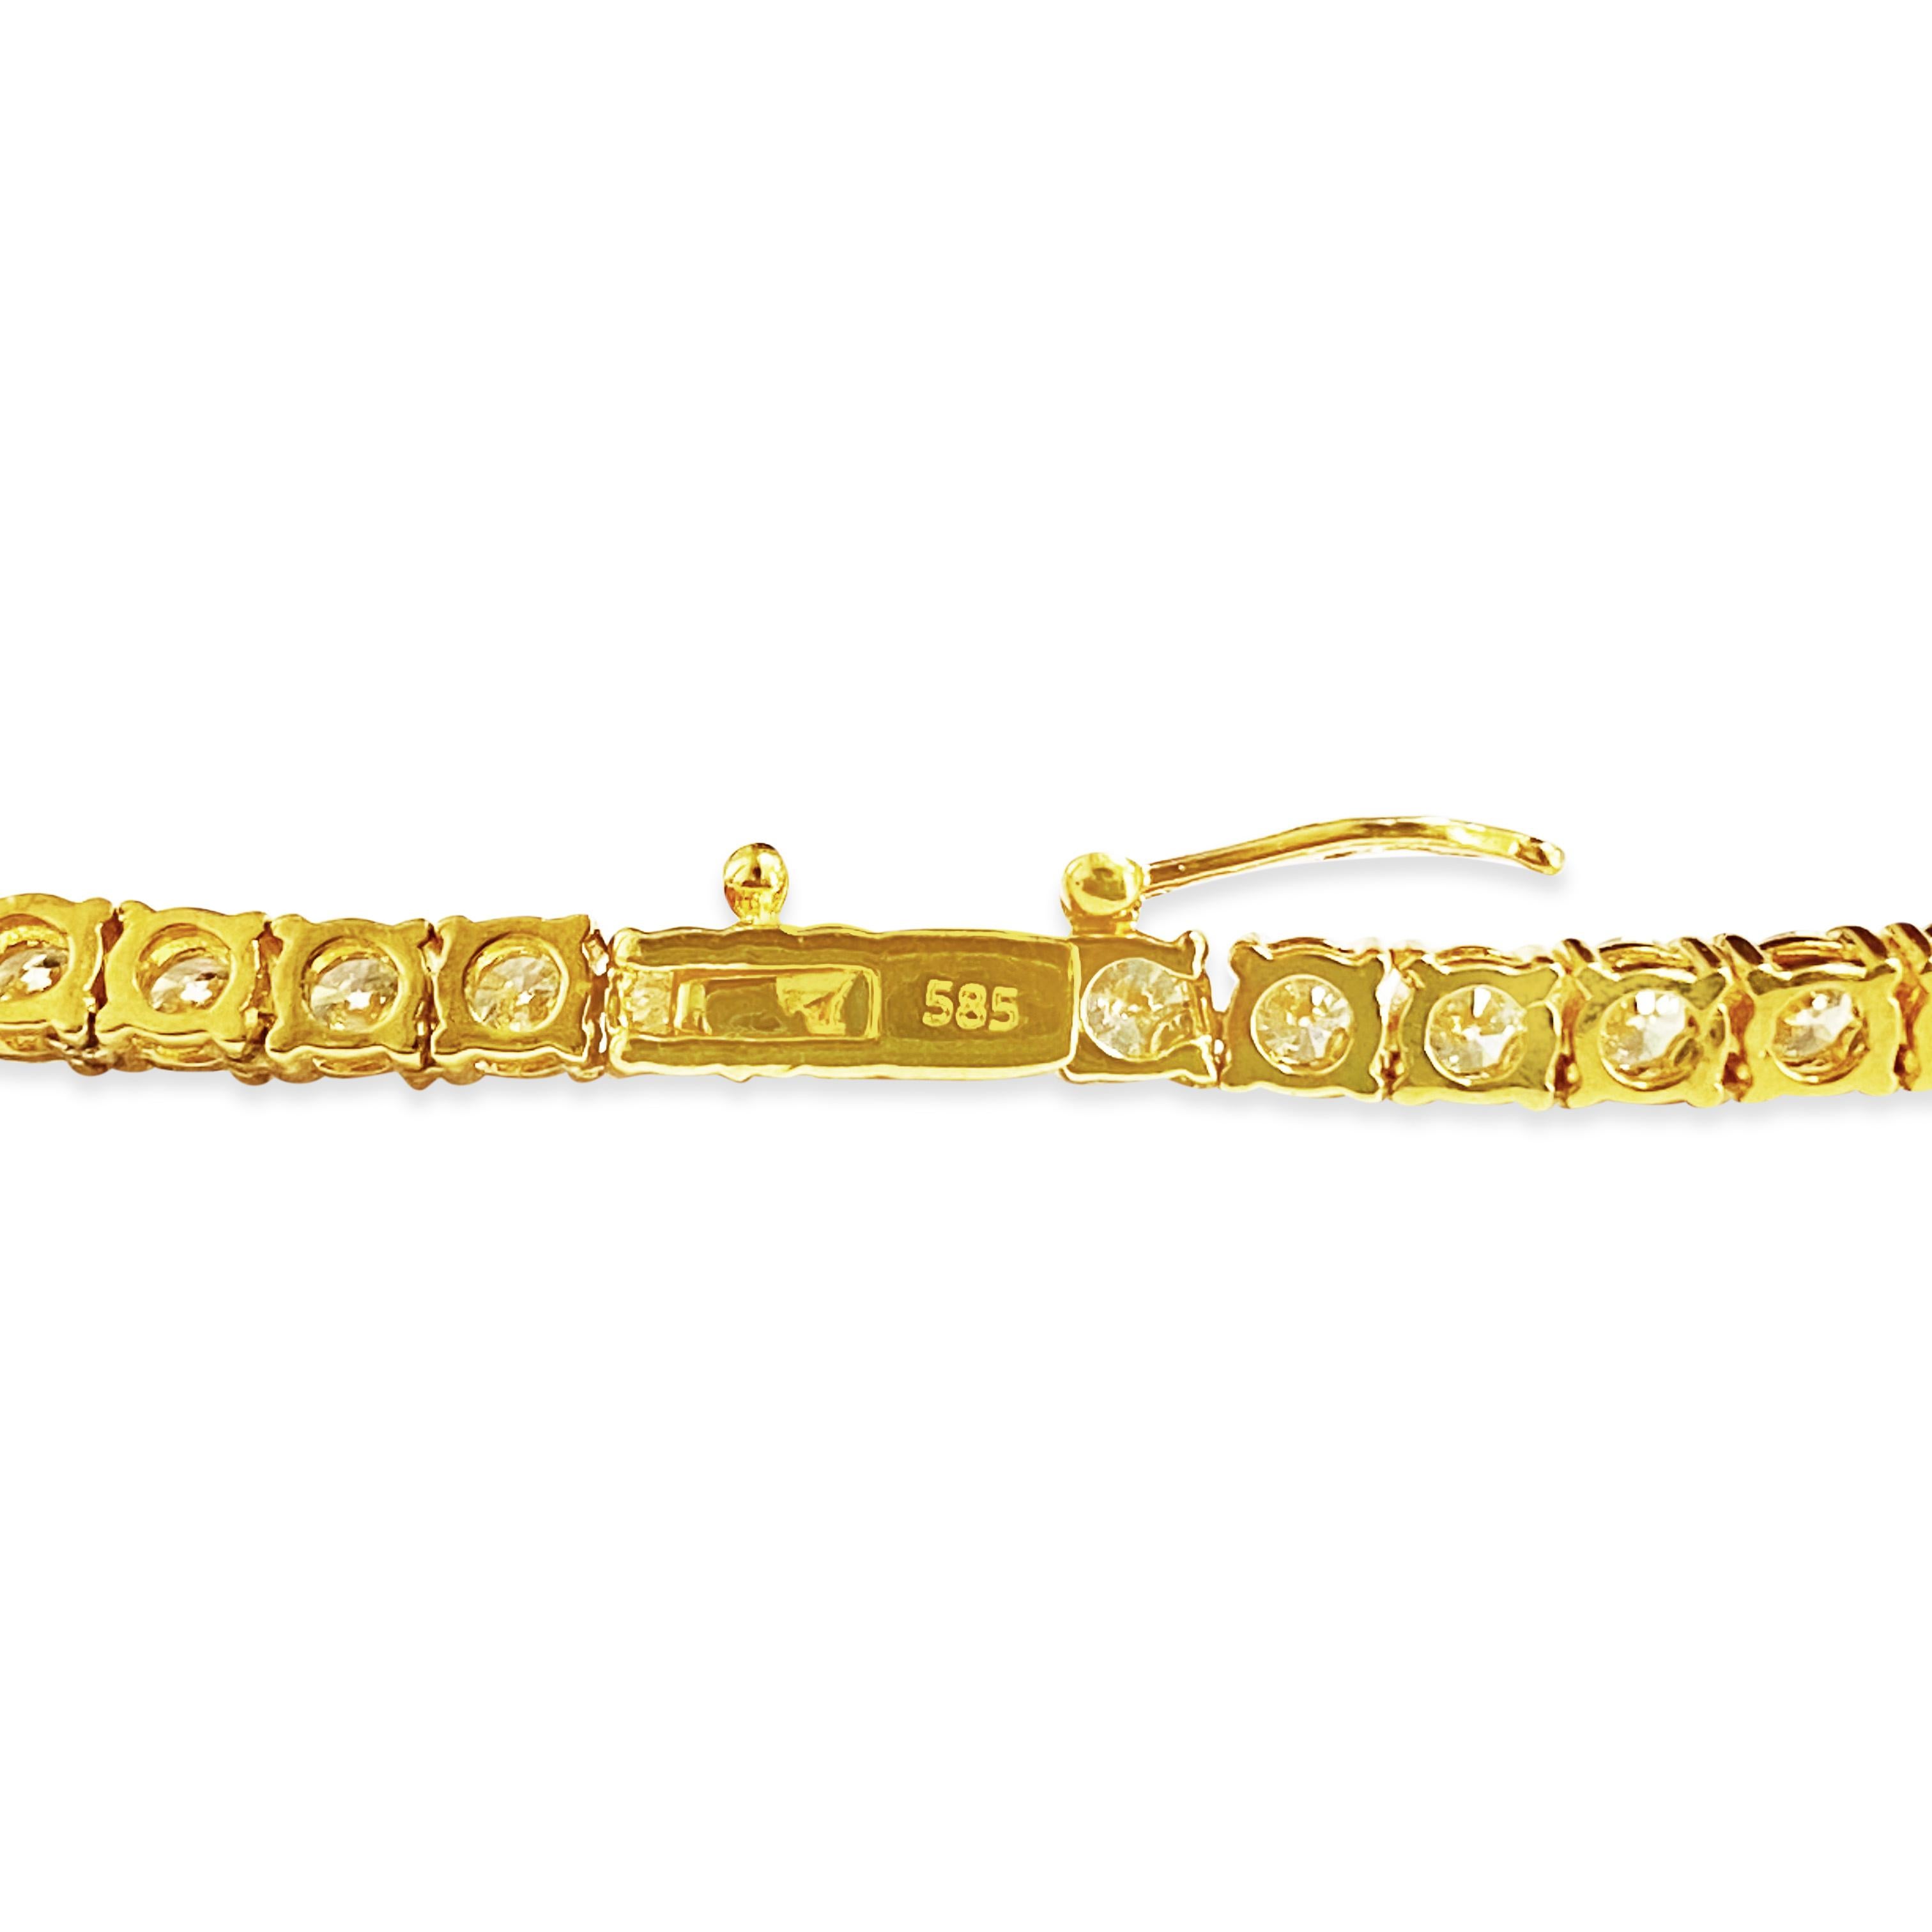 15.00 Carat VVS Diamond Tennis Necklace in 14k Gold For Sale 2